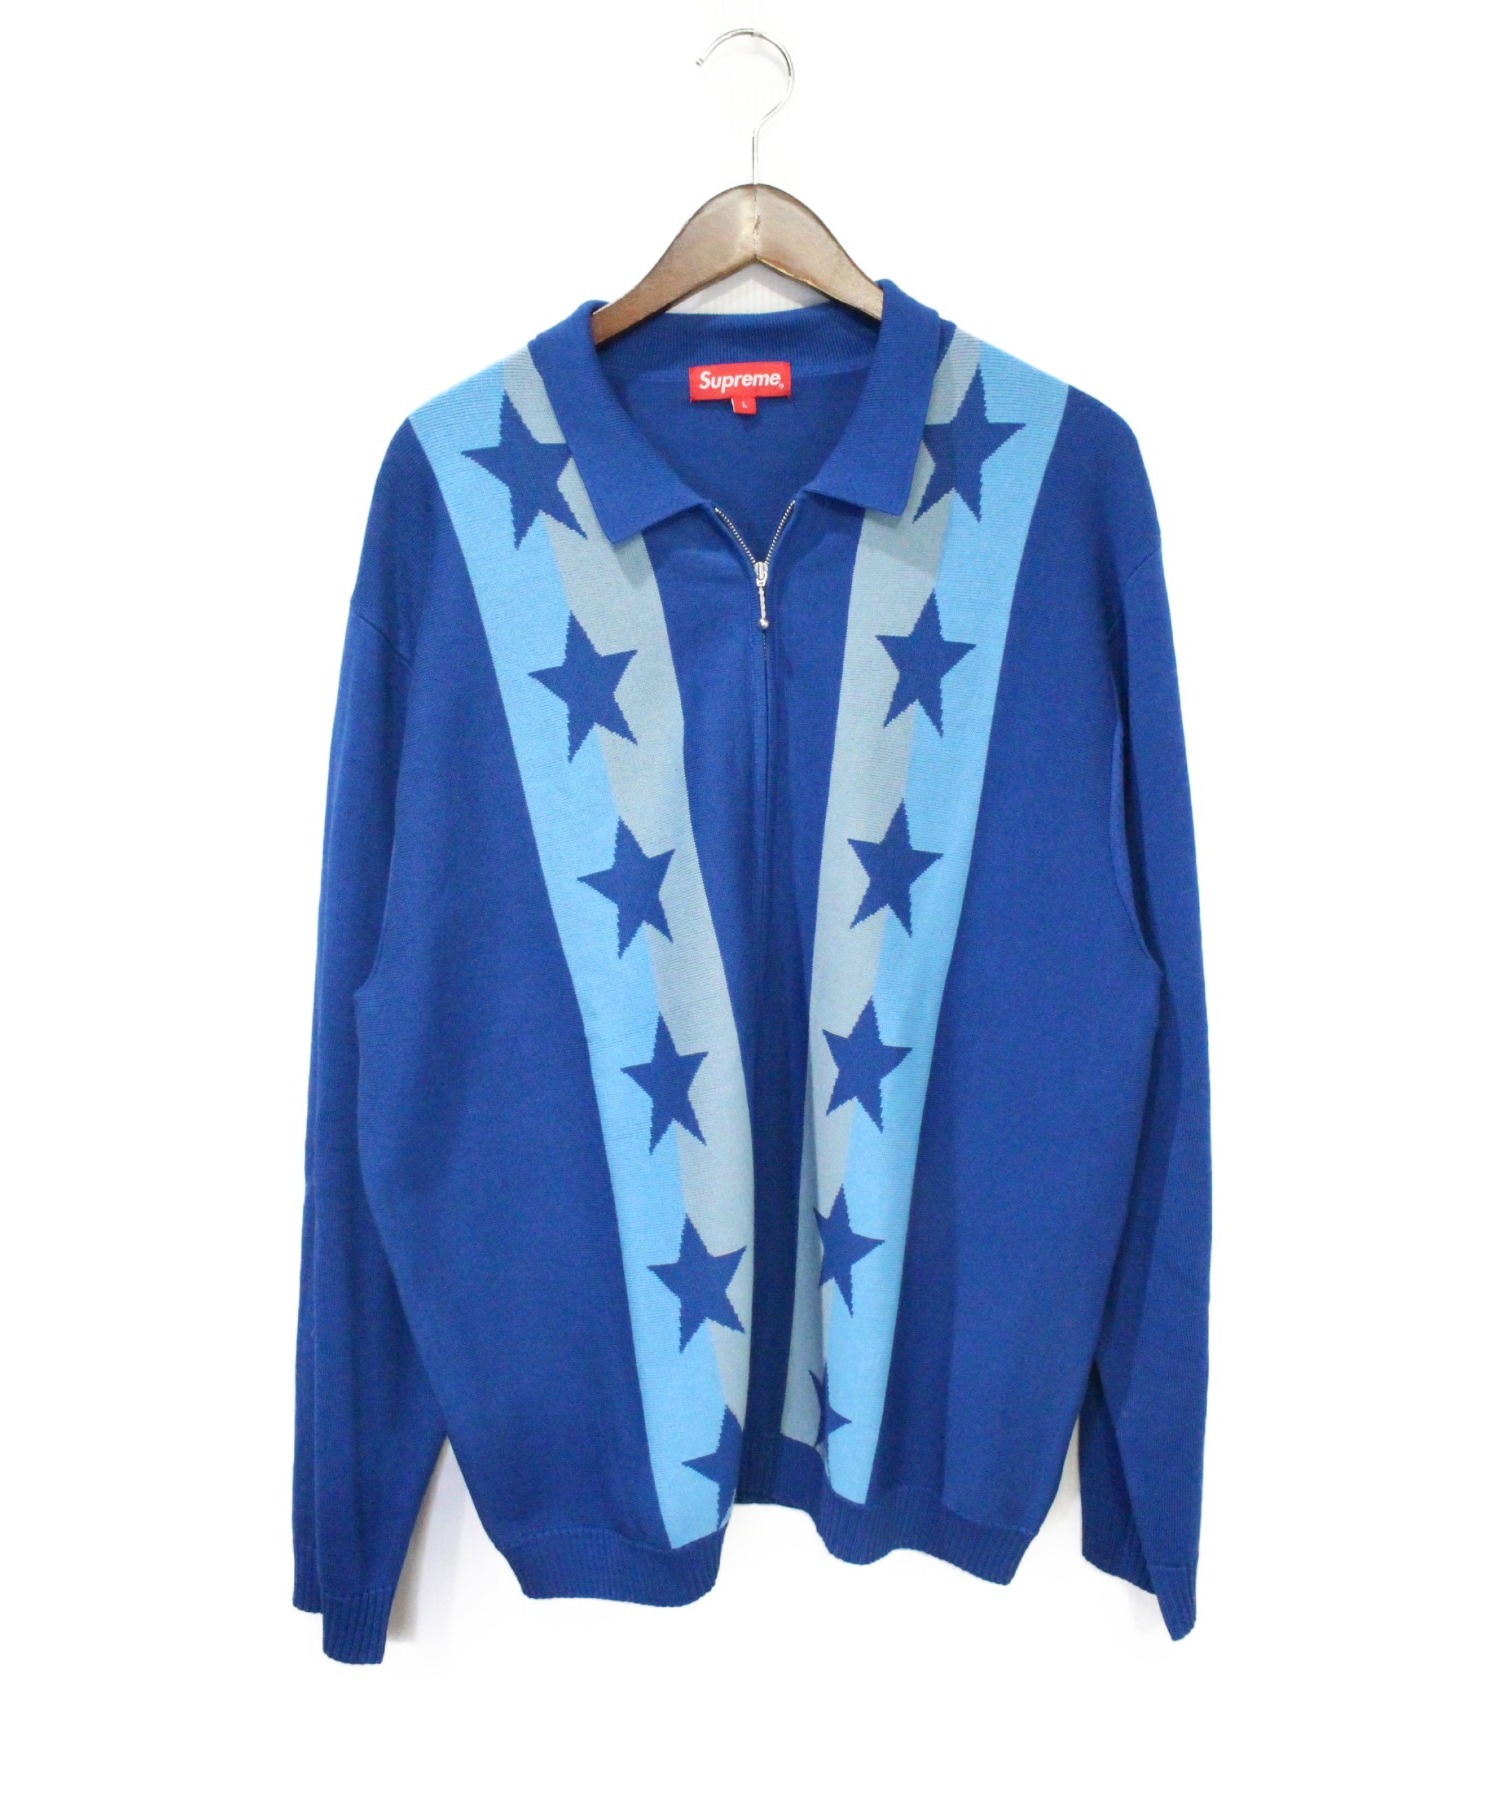 Supreme (シュプリーム) 20SS Stars Zip Up Sweater Polo ブルー サイズ:Ｌ